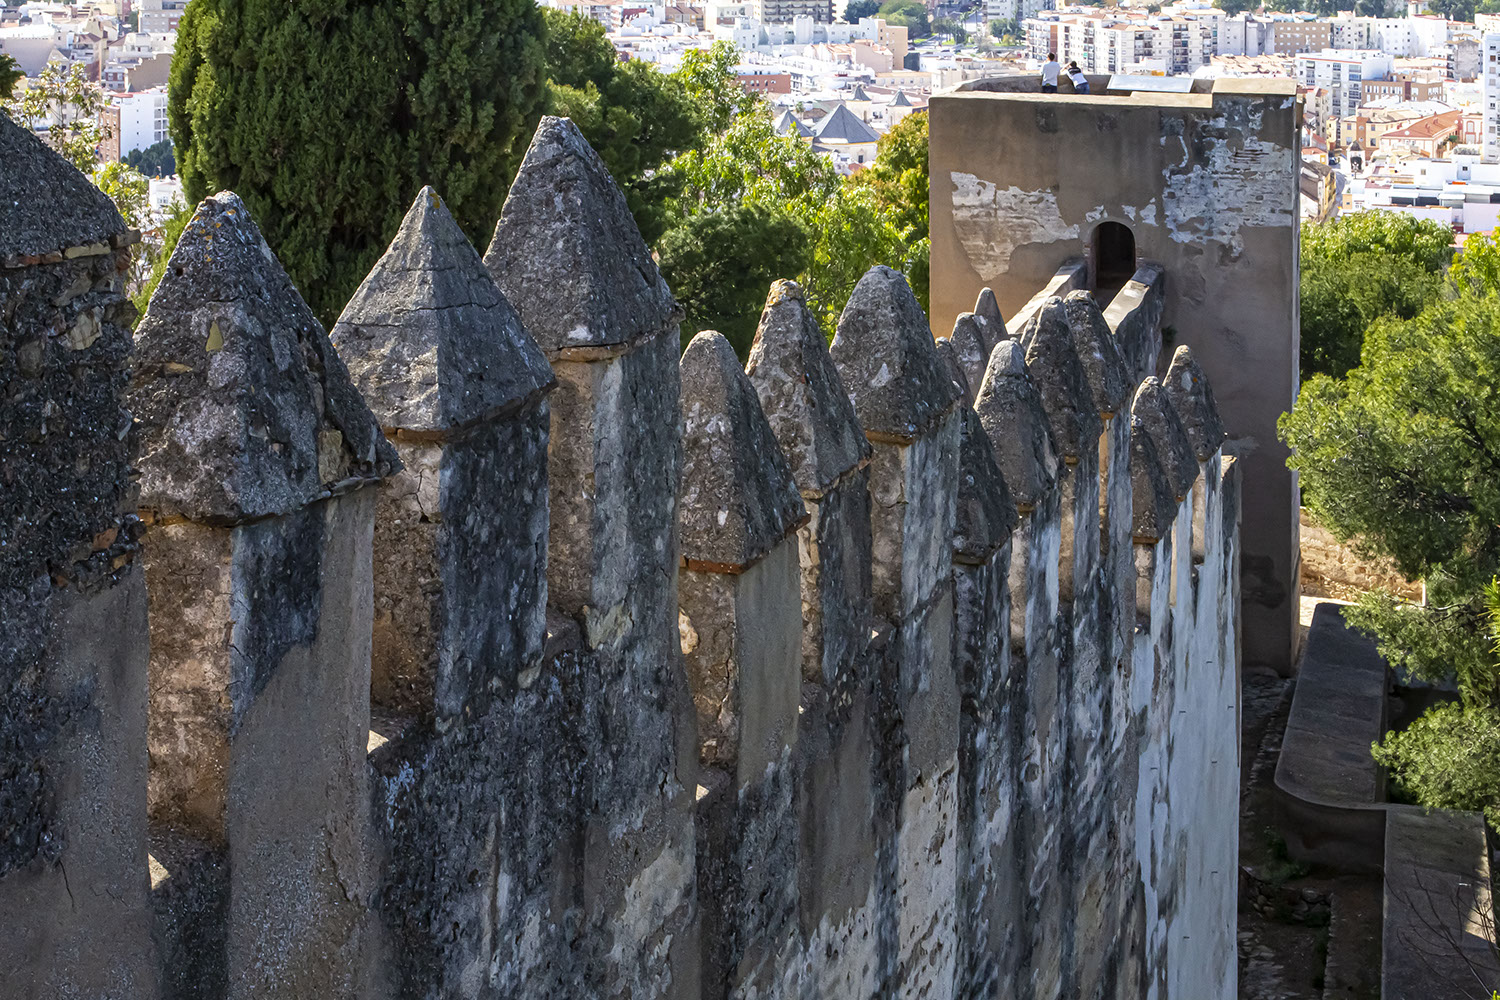 Spain, Walls of Moorish Fortress overlooking Malaga, taken from the footpath to Monte Gibralfaro.